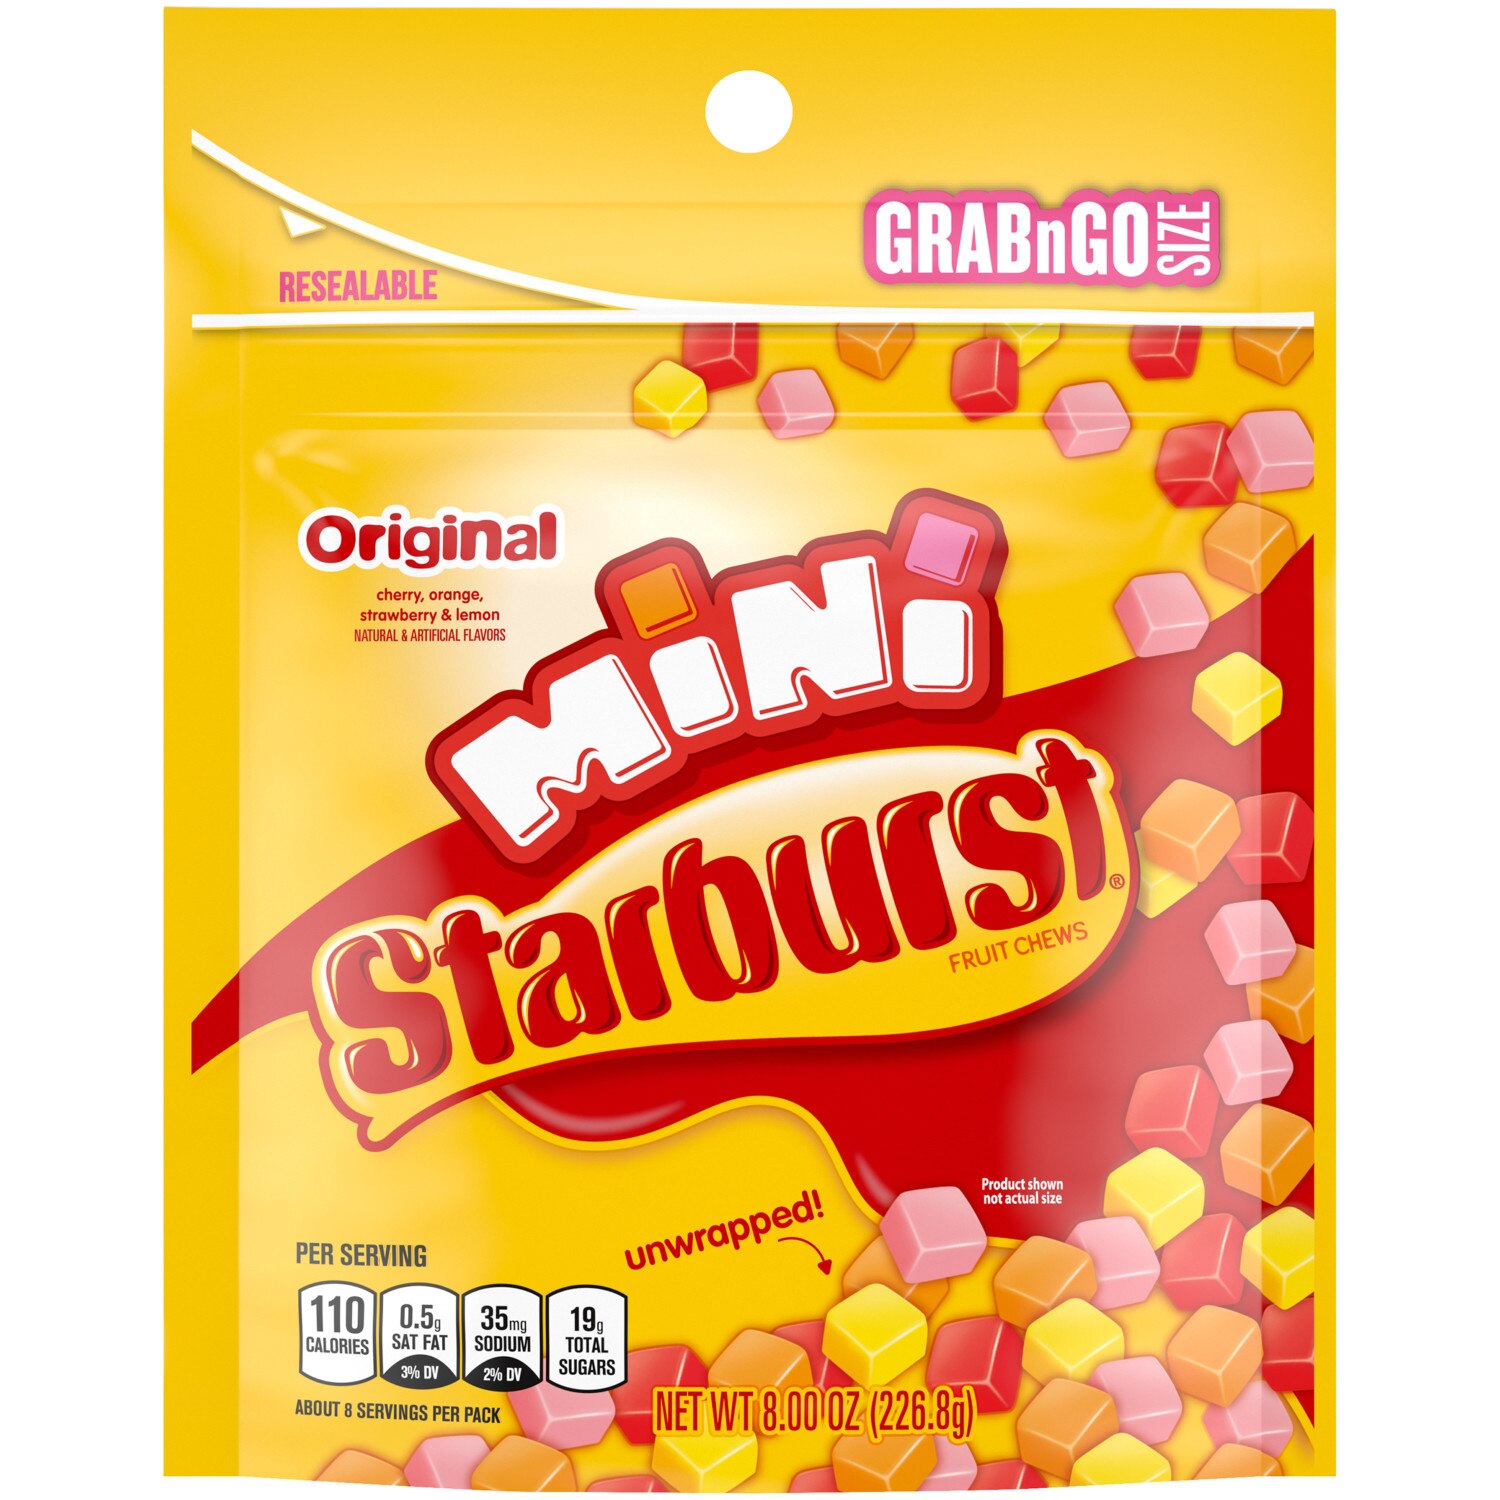 STARBURST Original Minis Size Fruit Chews Chewy Candy, Grab N Go, 8 oz Bag